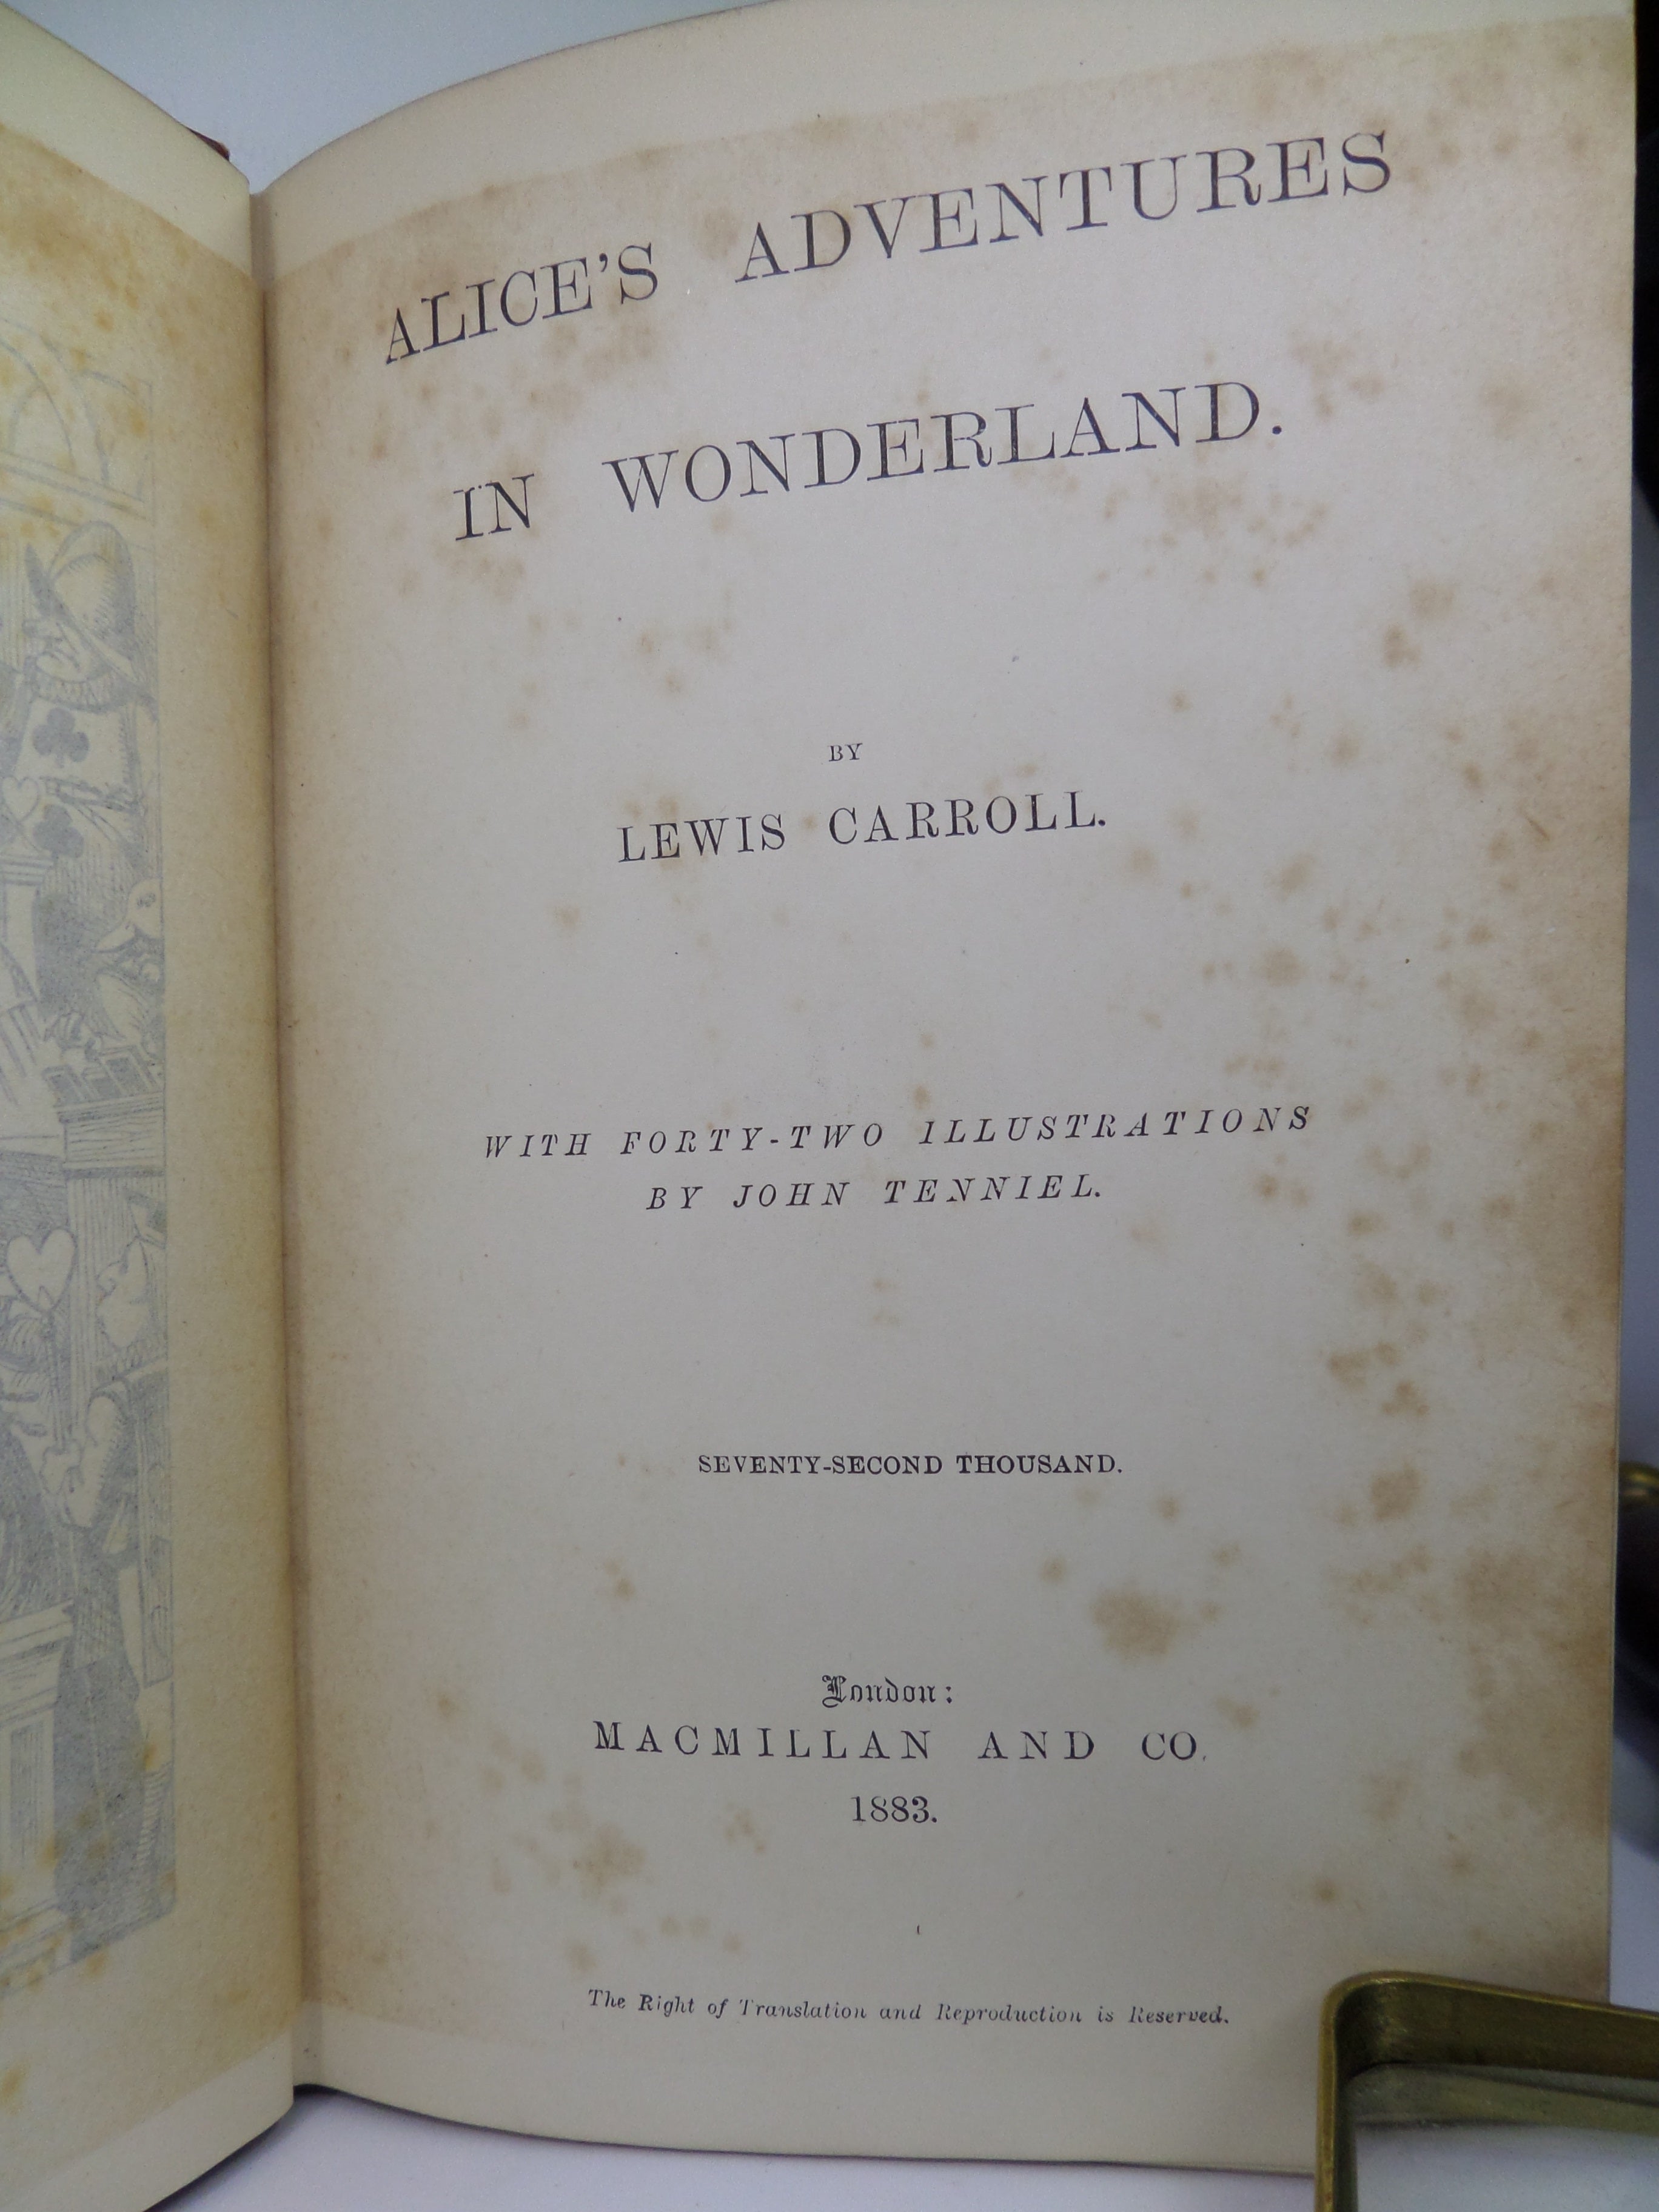 ALICE'S ADVENTURES IN WONDERLAND BY LEWIS CARROLL 1883